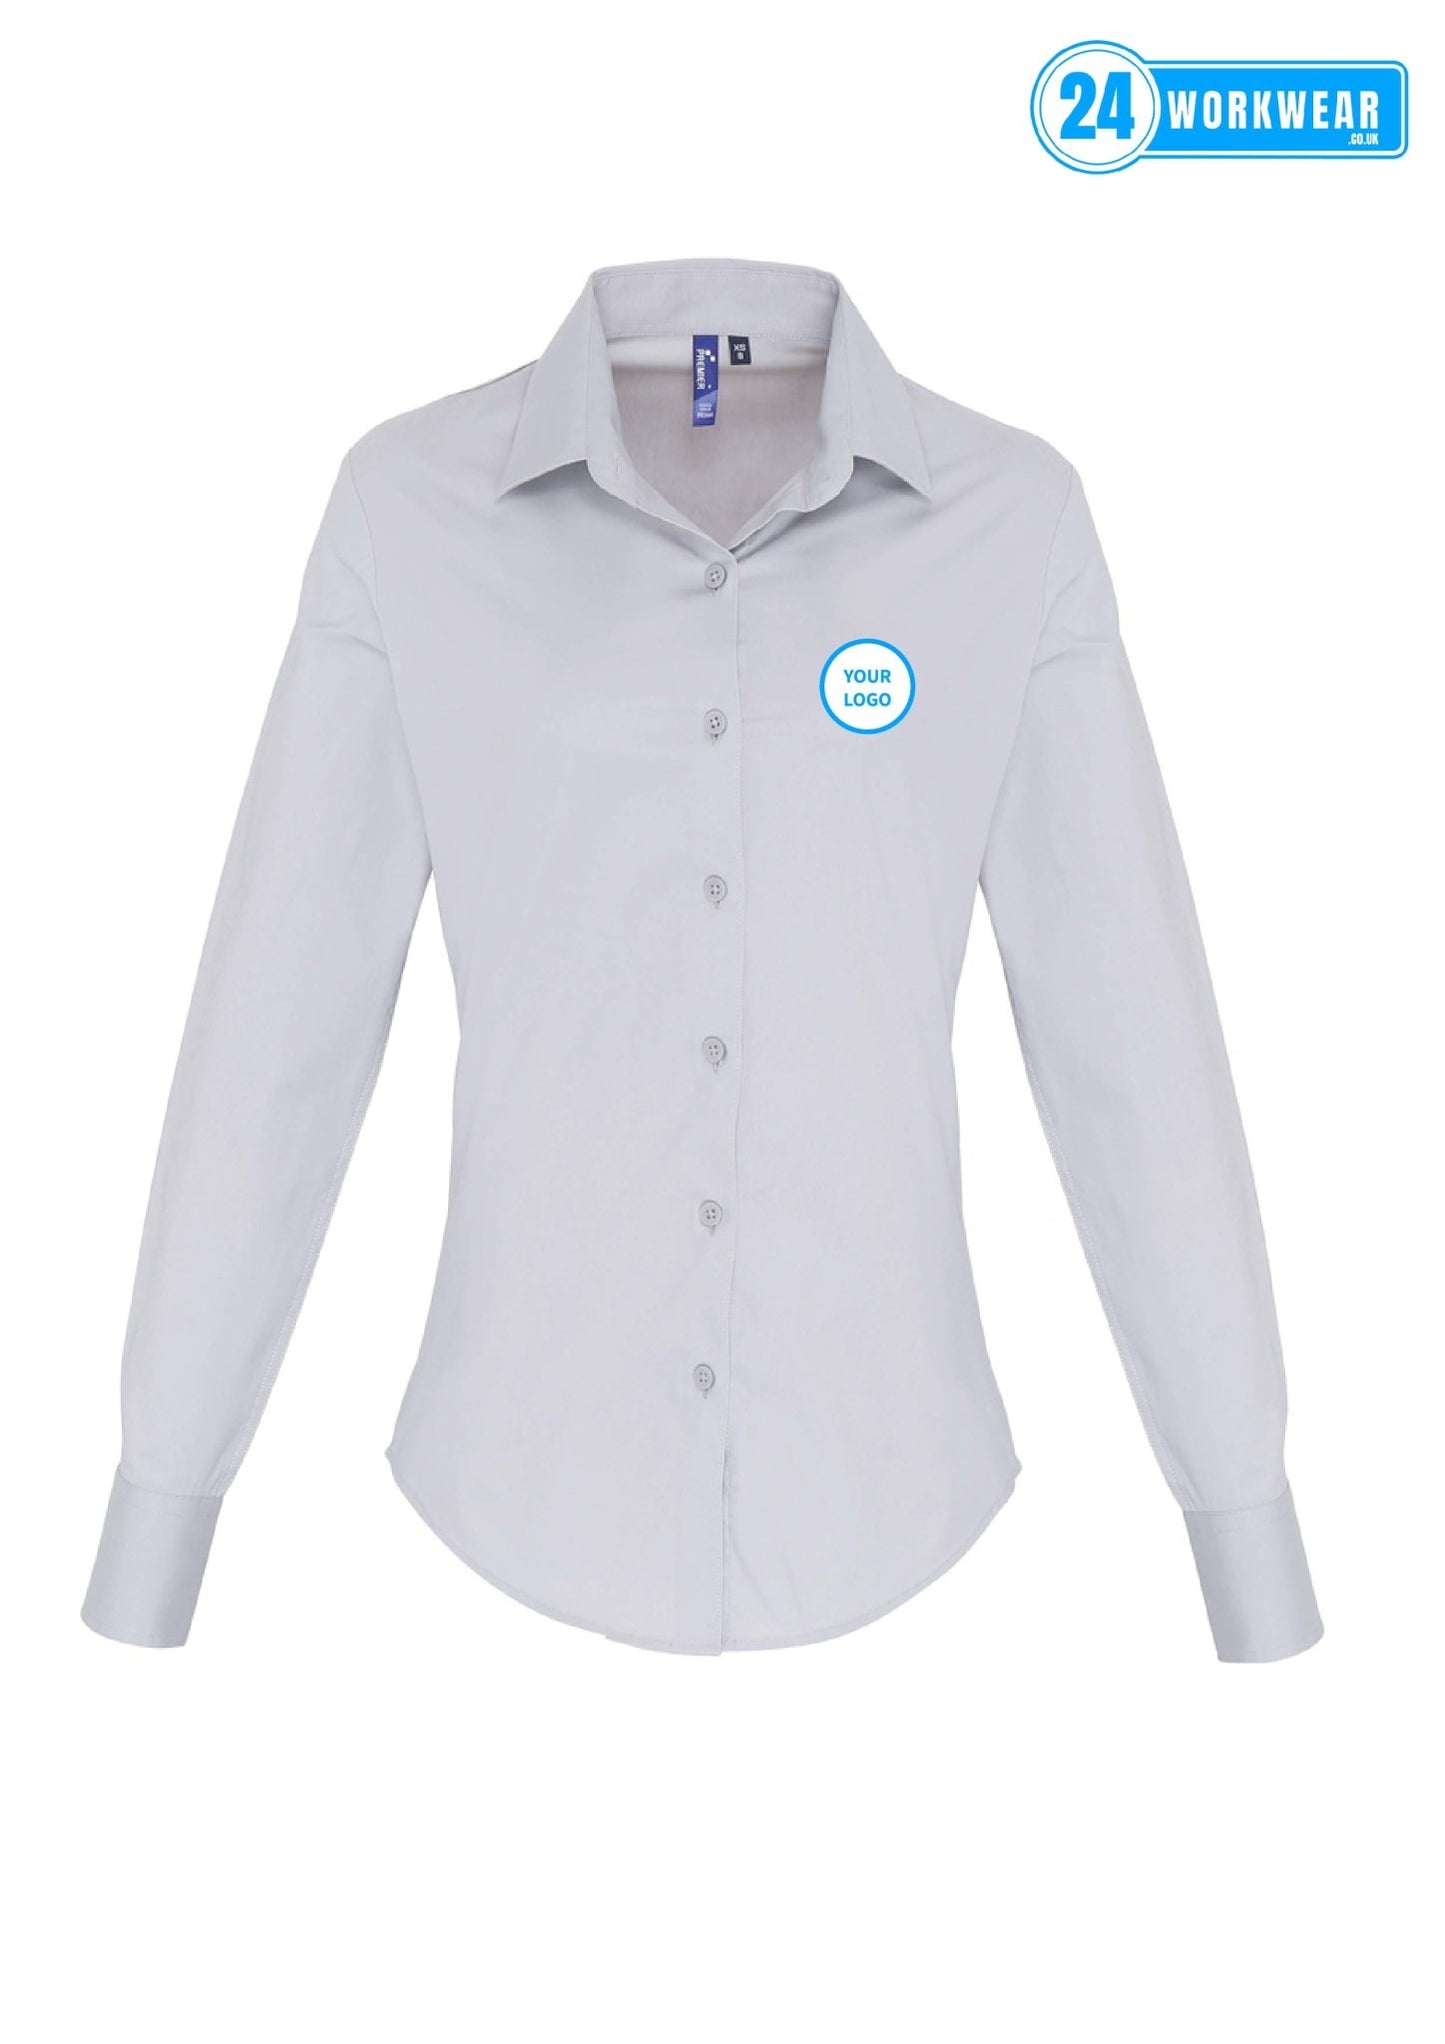 Premier Ladies Long Sleeve Stretch Fit Poplin Shirt - 24 Workwear - Shirt